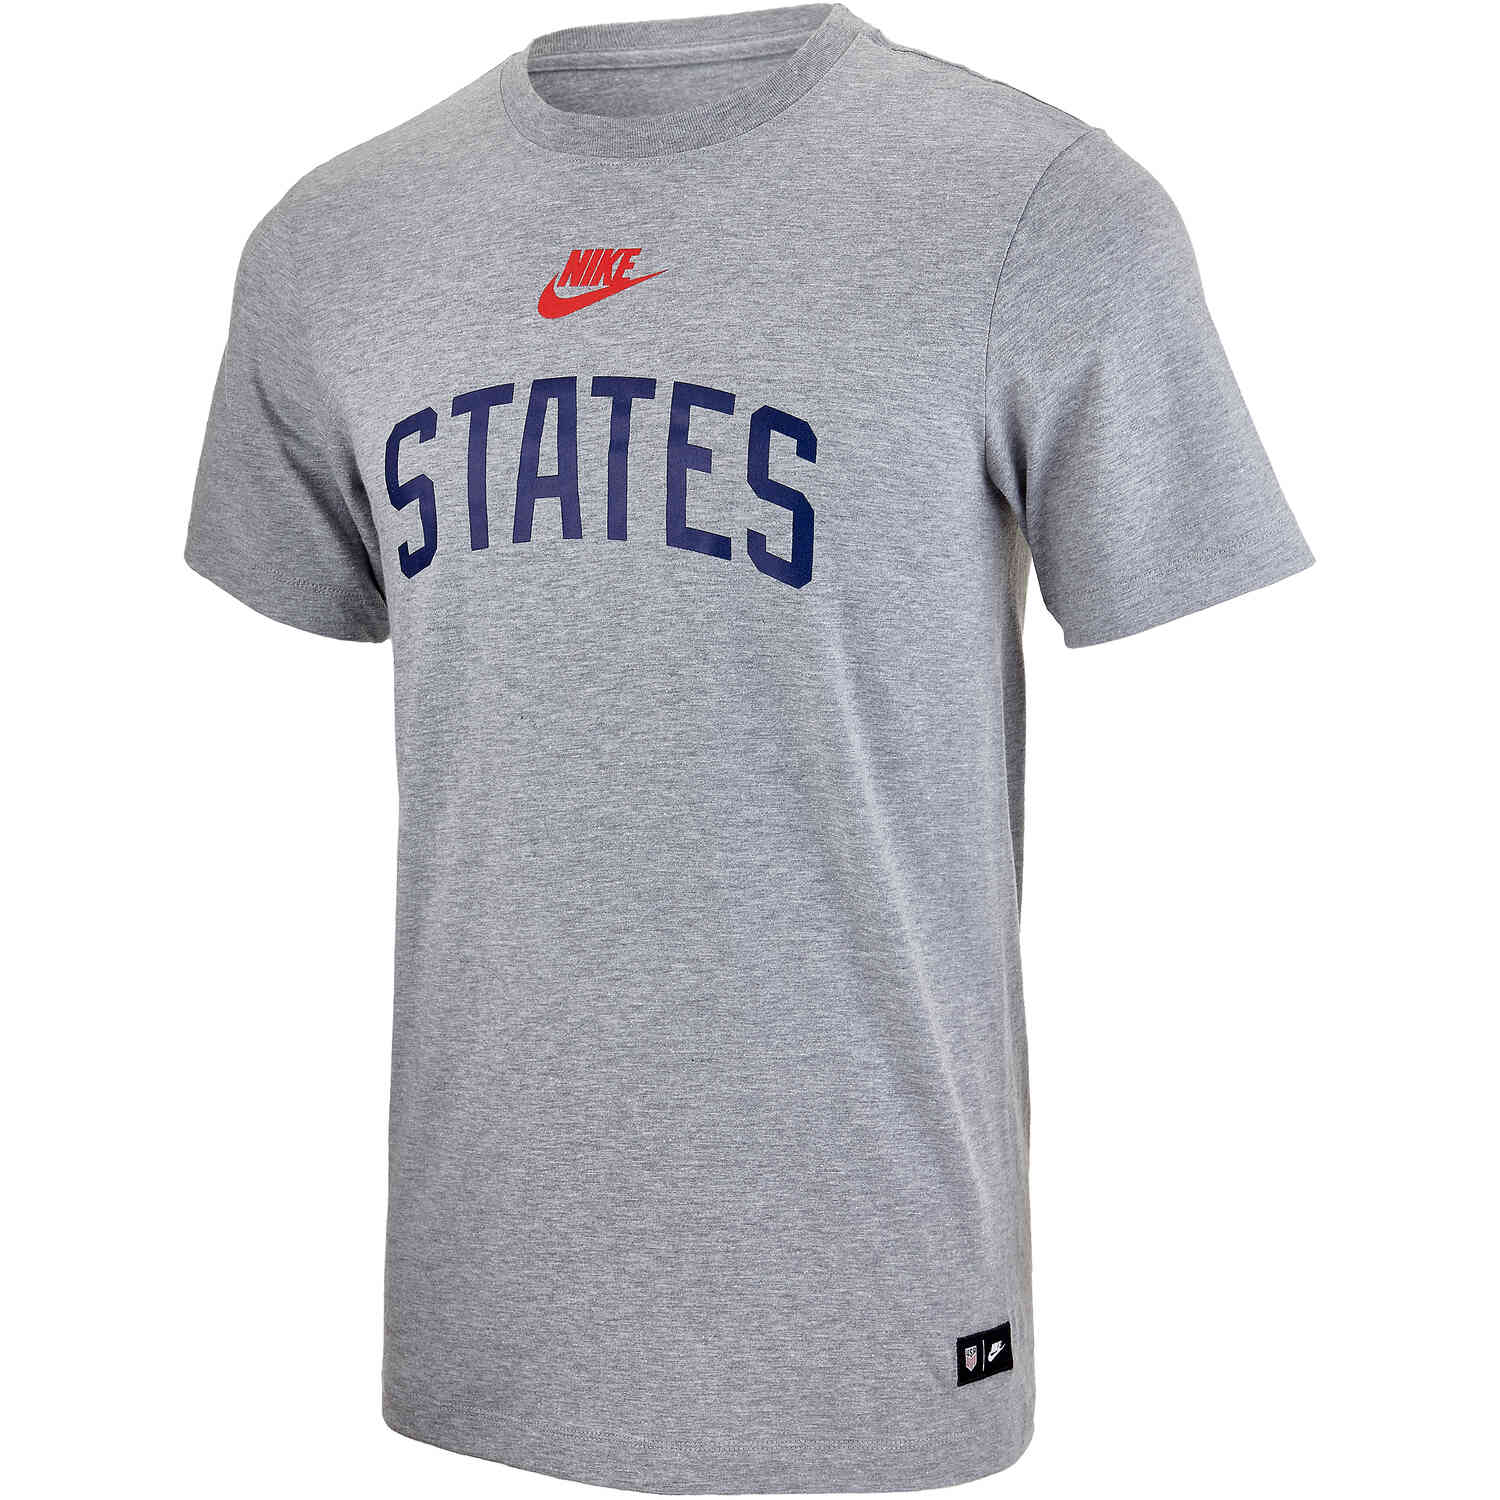 Nike USMNT States Tee - Dark Grey Heather - Soccer Master